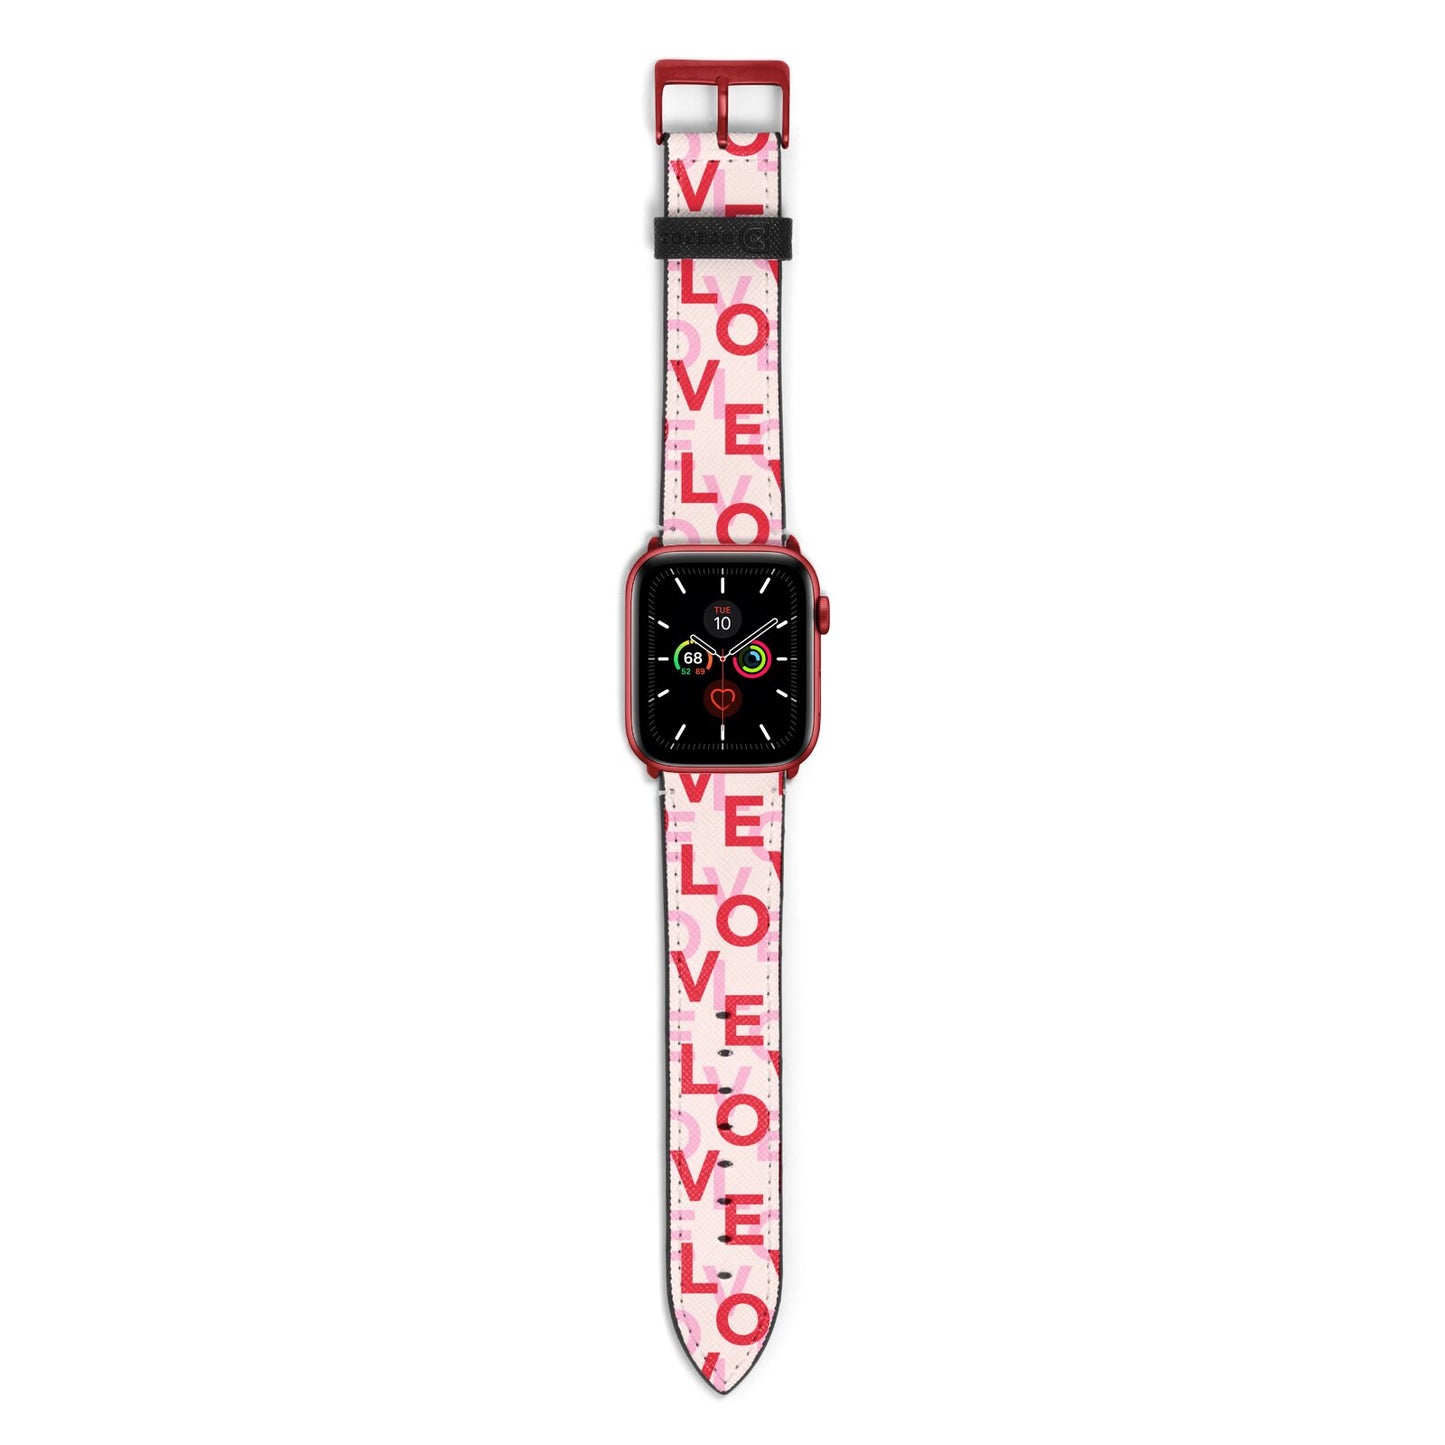 Love Valentine Apple Watch Strap with Red Hardware